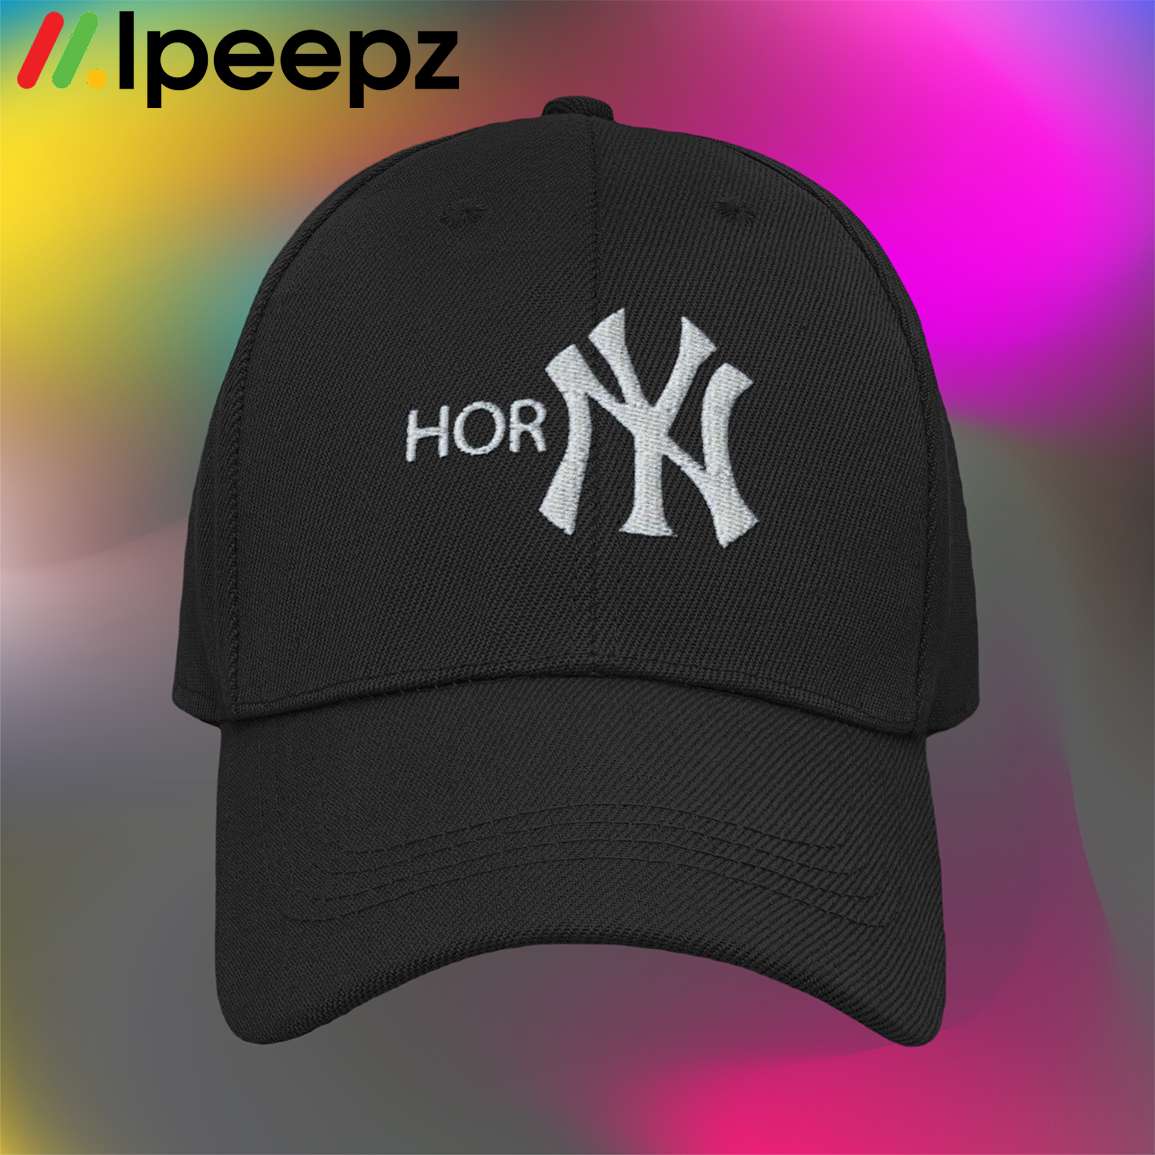 Horny New York Yankees logo shirt, hoodie, sweater, long sleeve and tank top